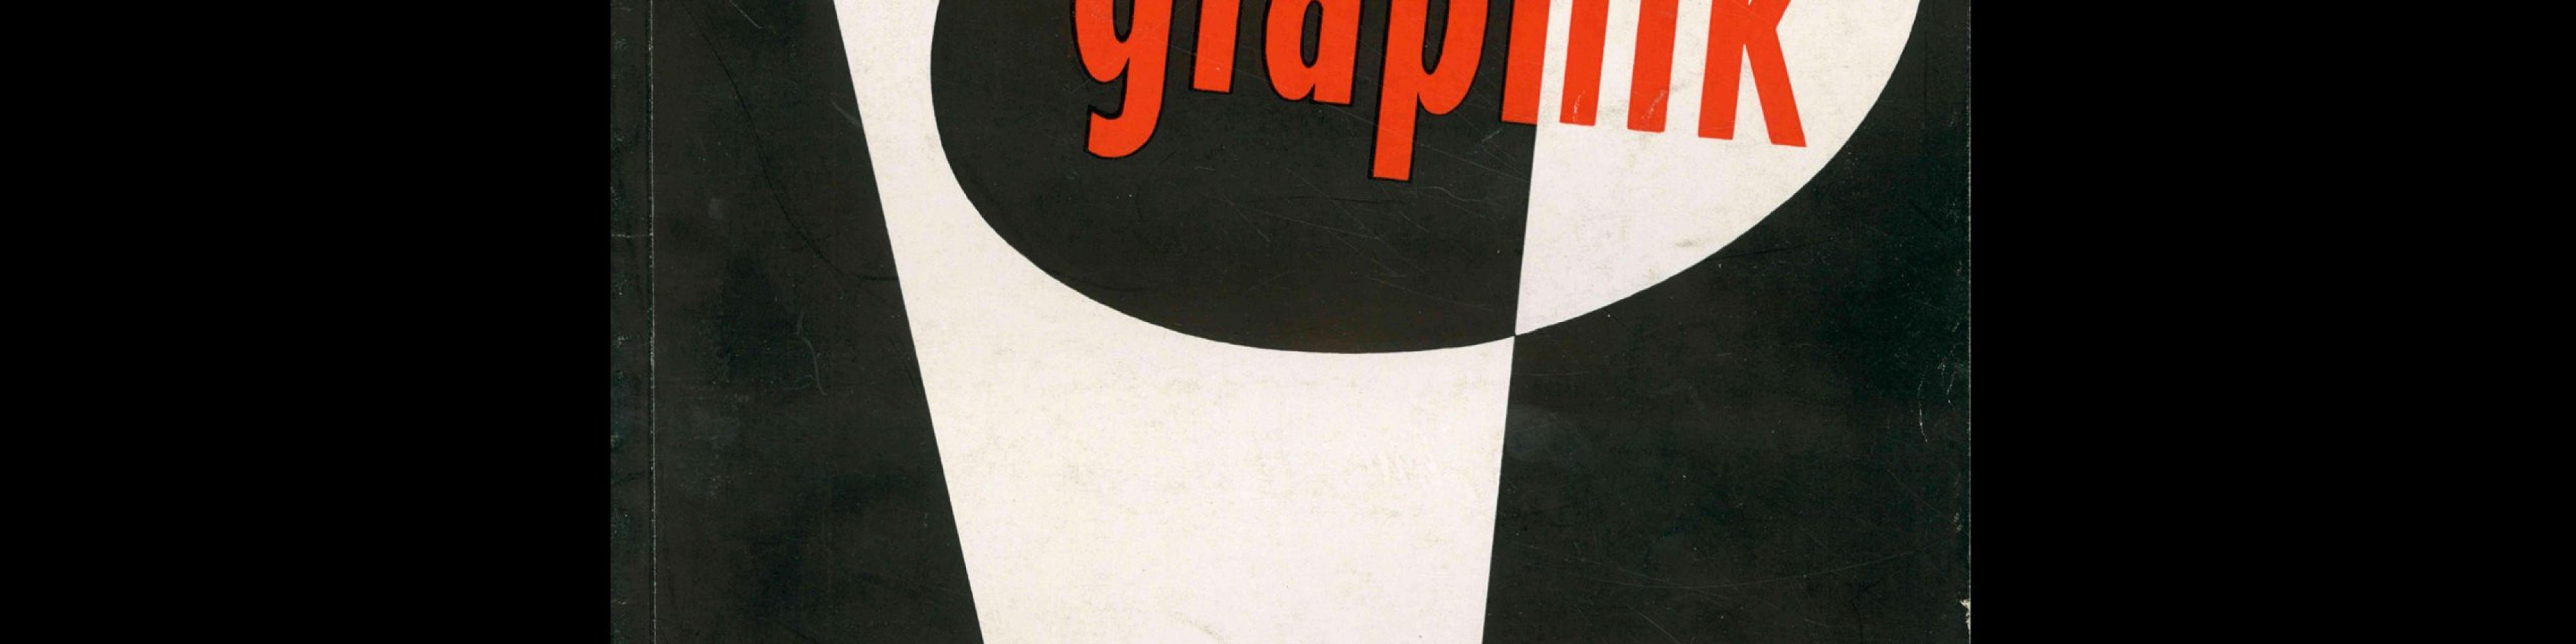 Graphik – Werbung + Formgebung, 5, 1950